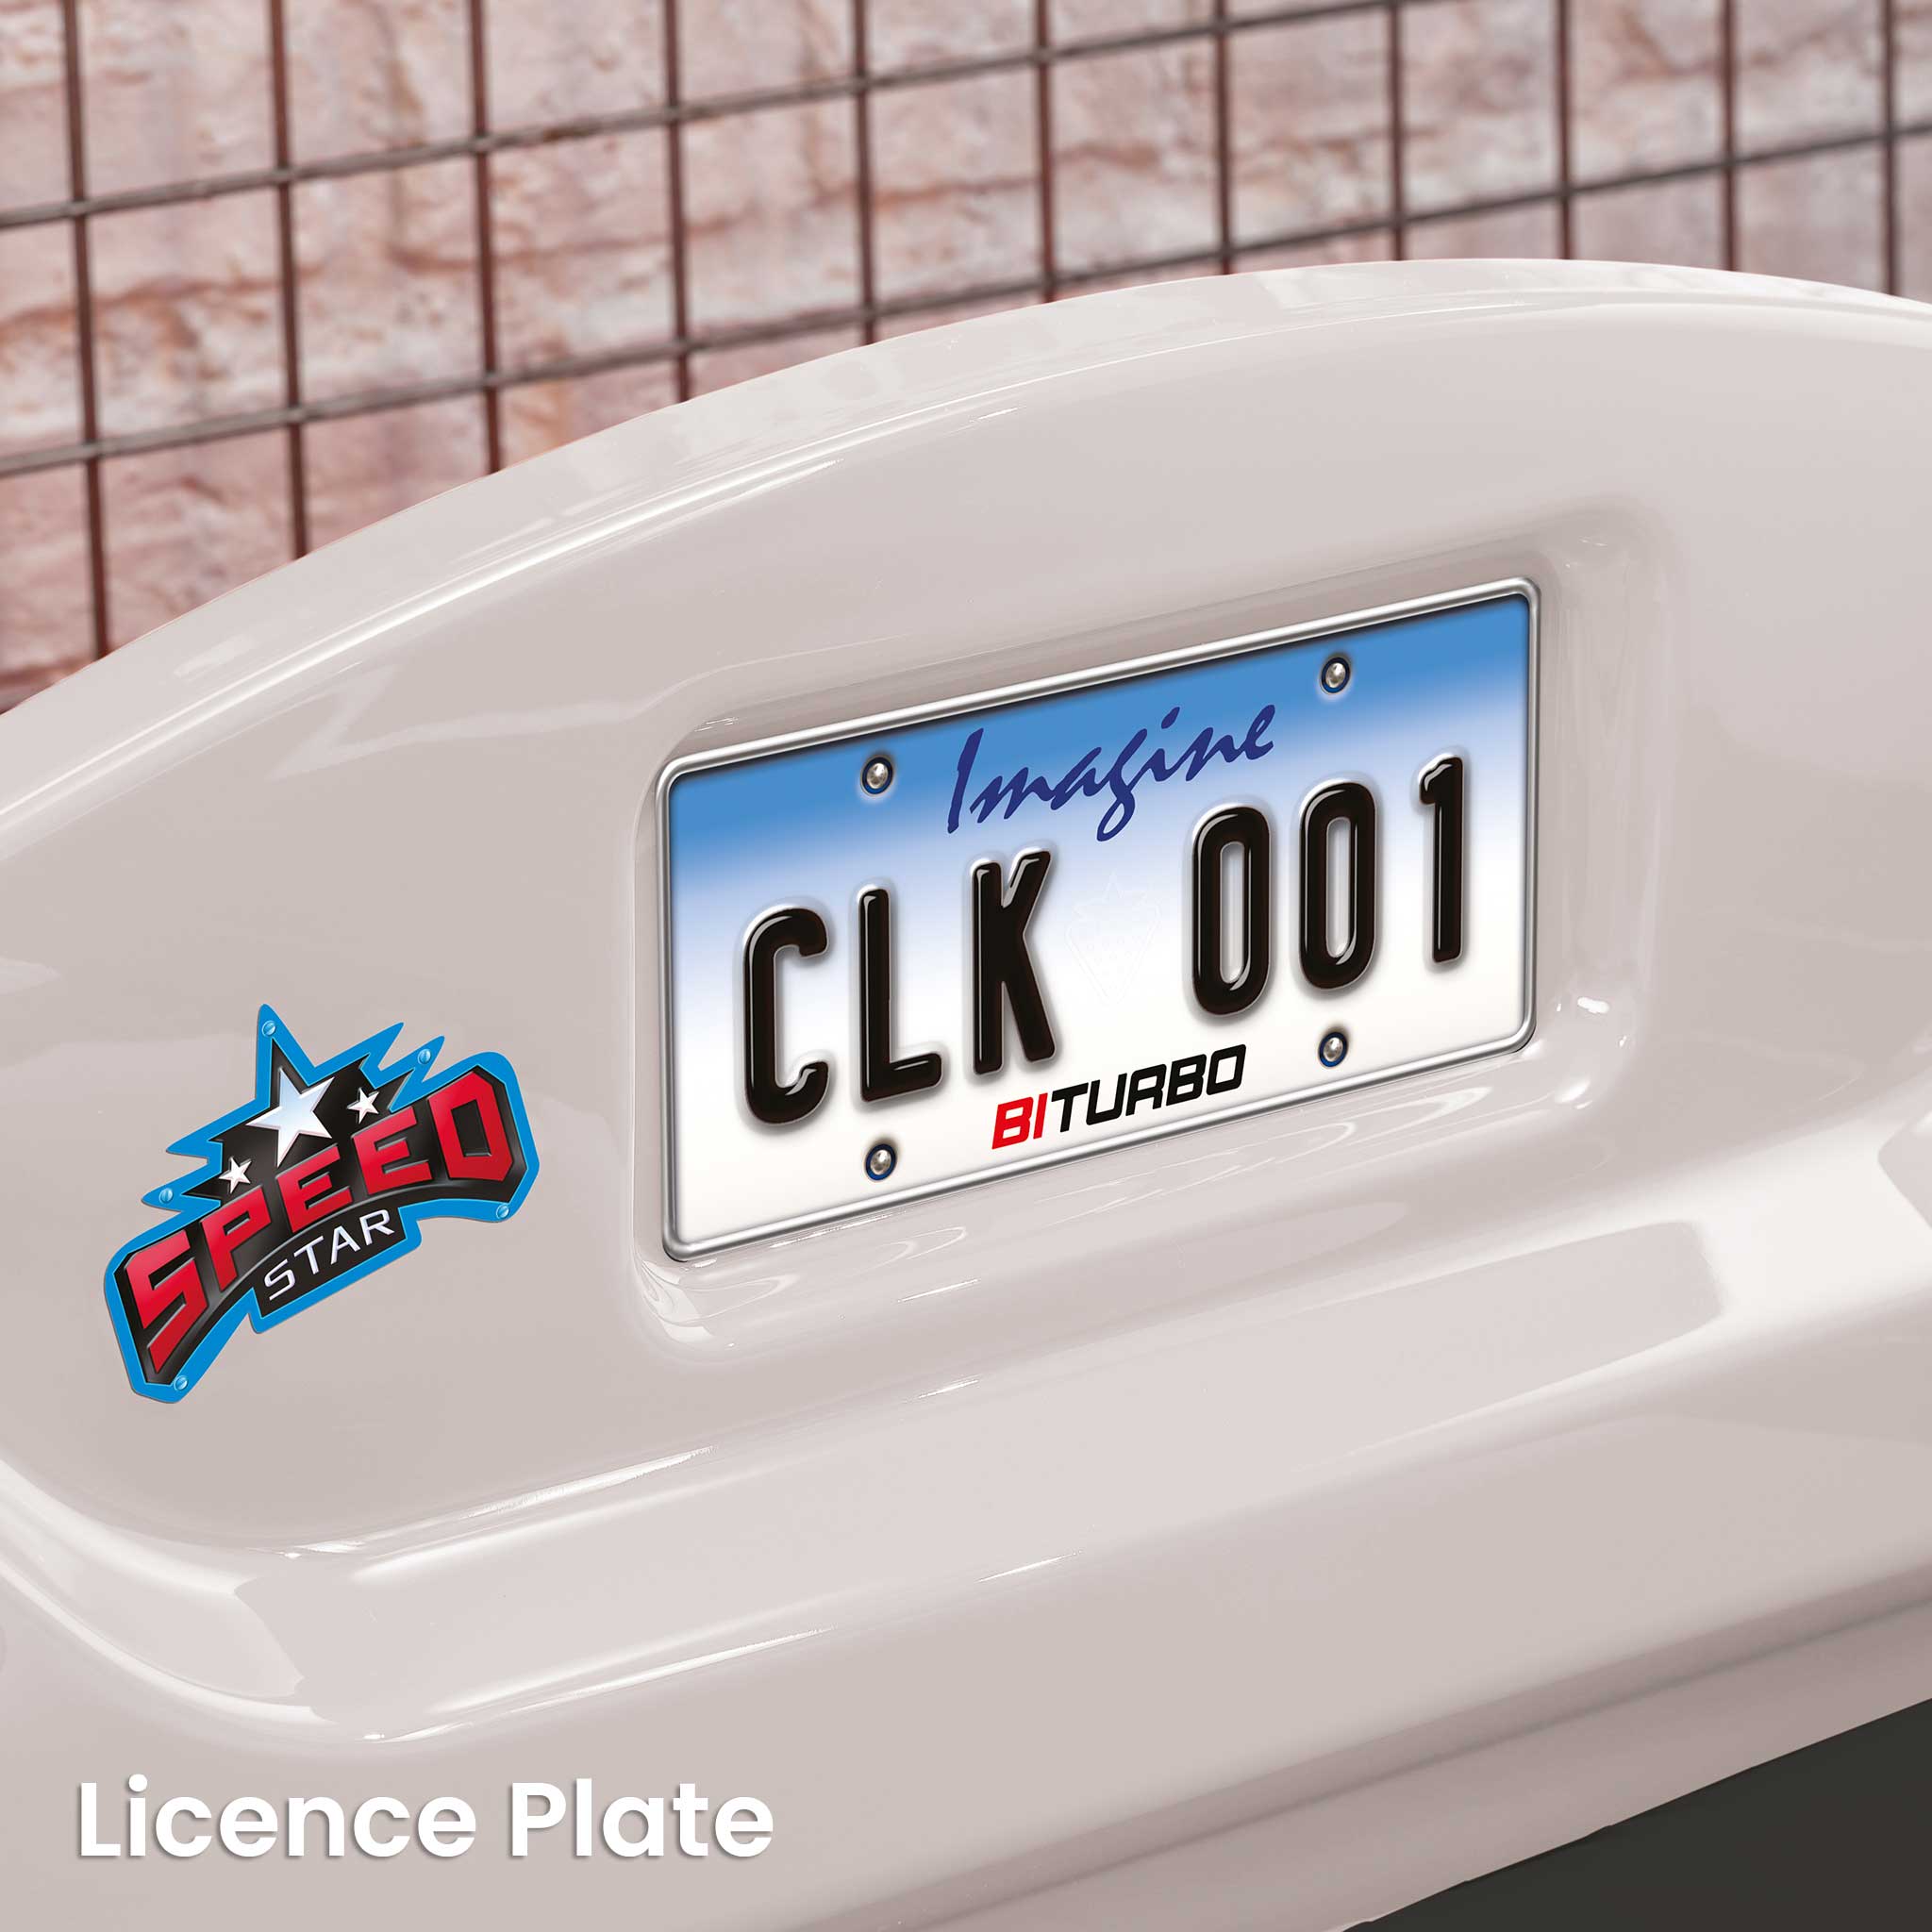 Pirate Crew License Plate Frame